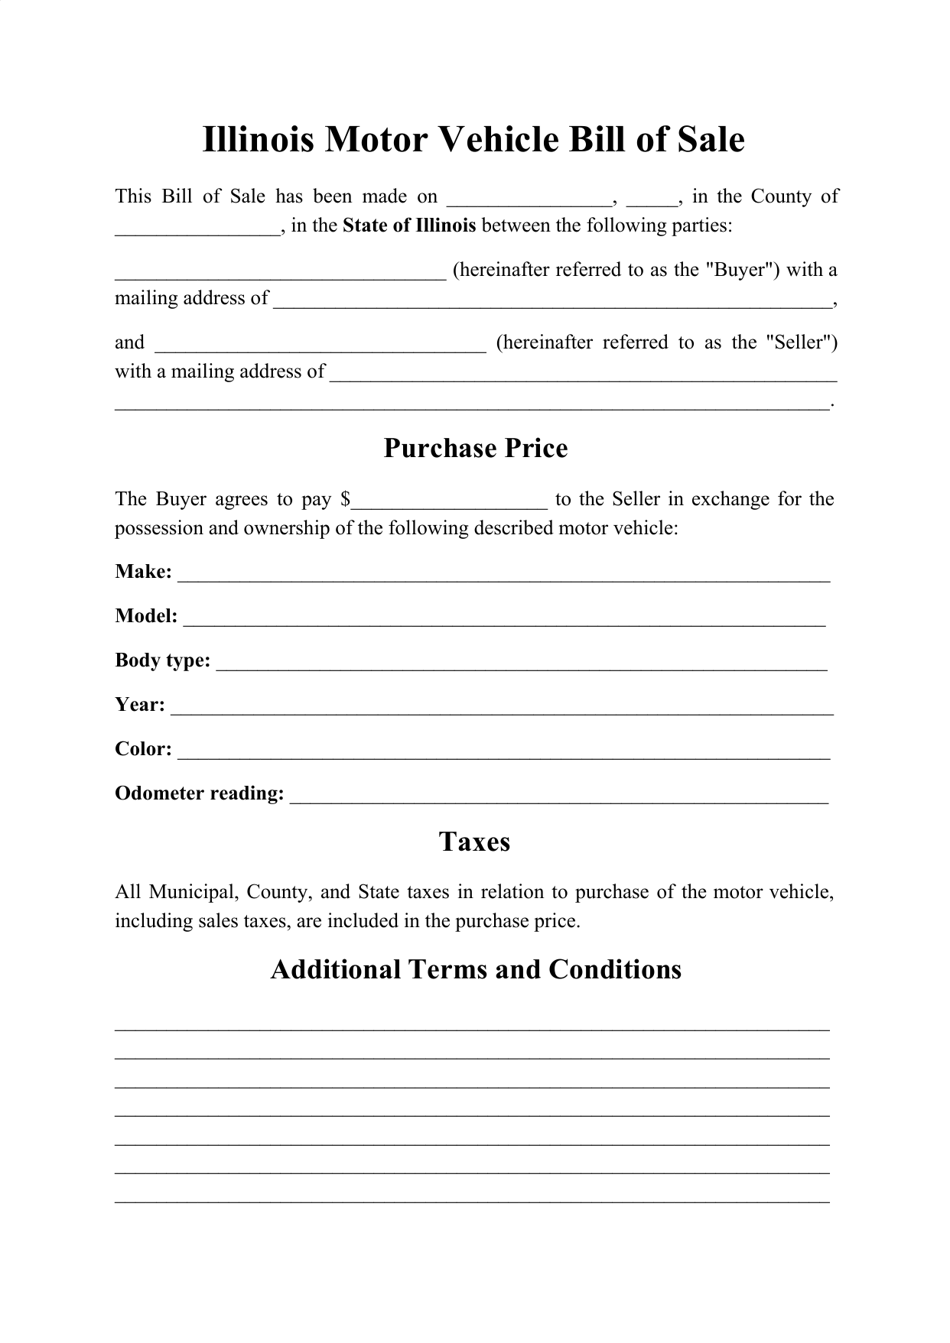 Illinois Motor Vehicle Bill Of Sale Form Download Printable PDF 